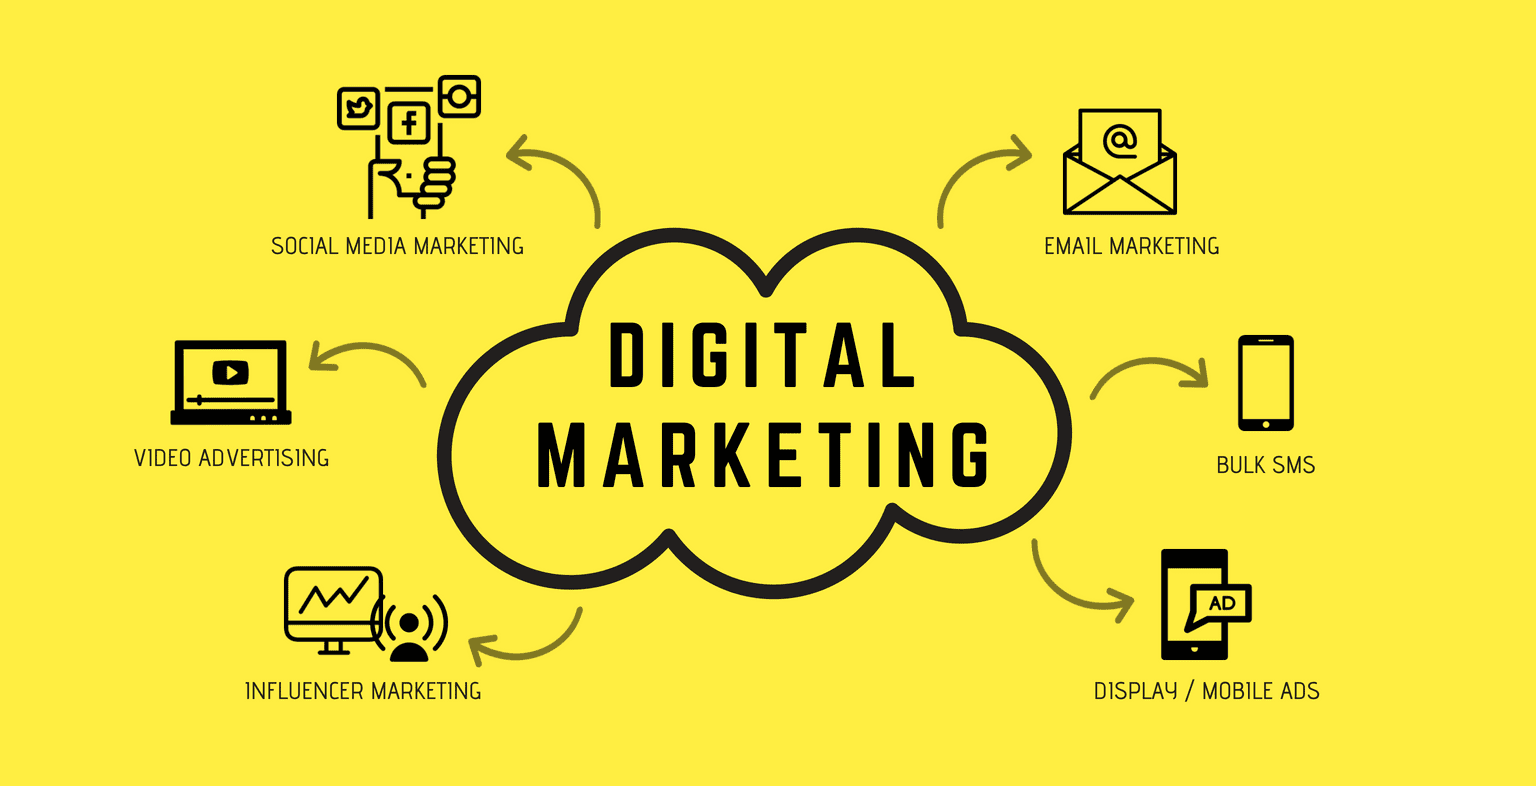 What Is Digital Marketing